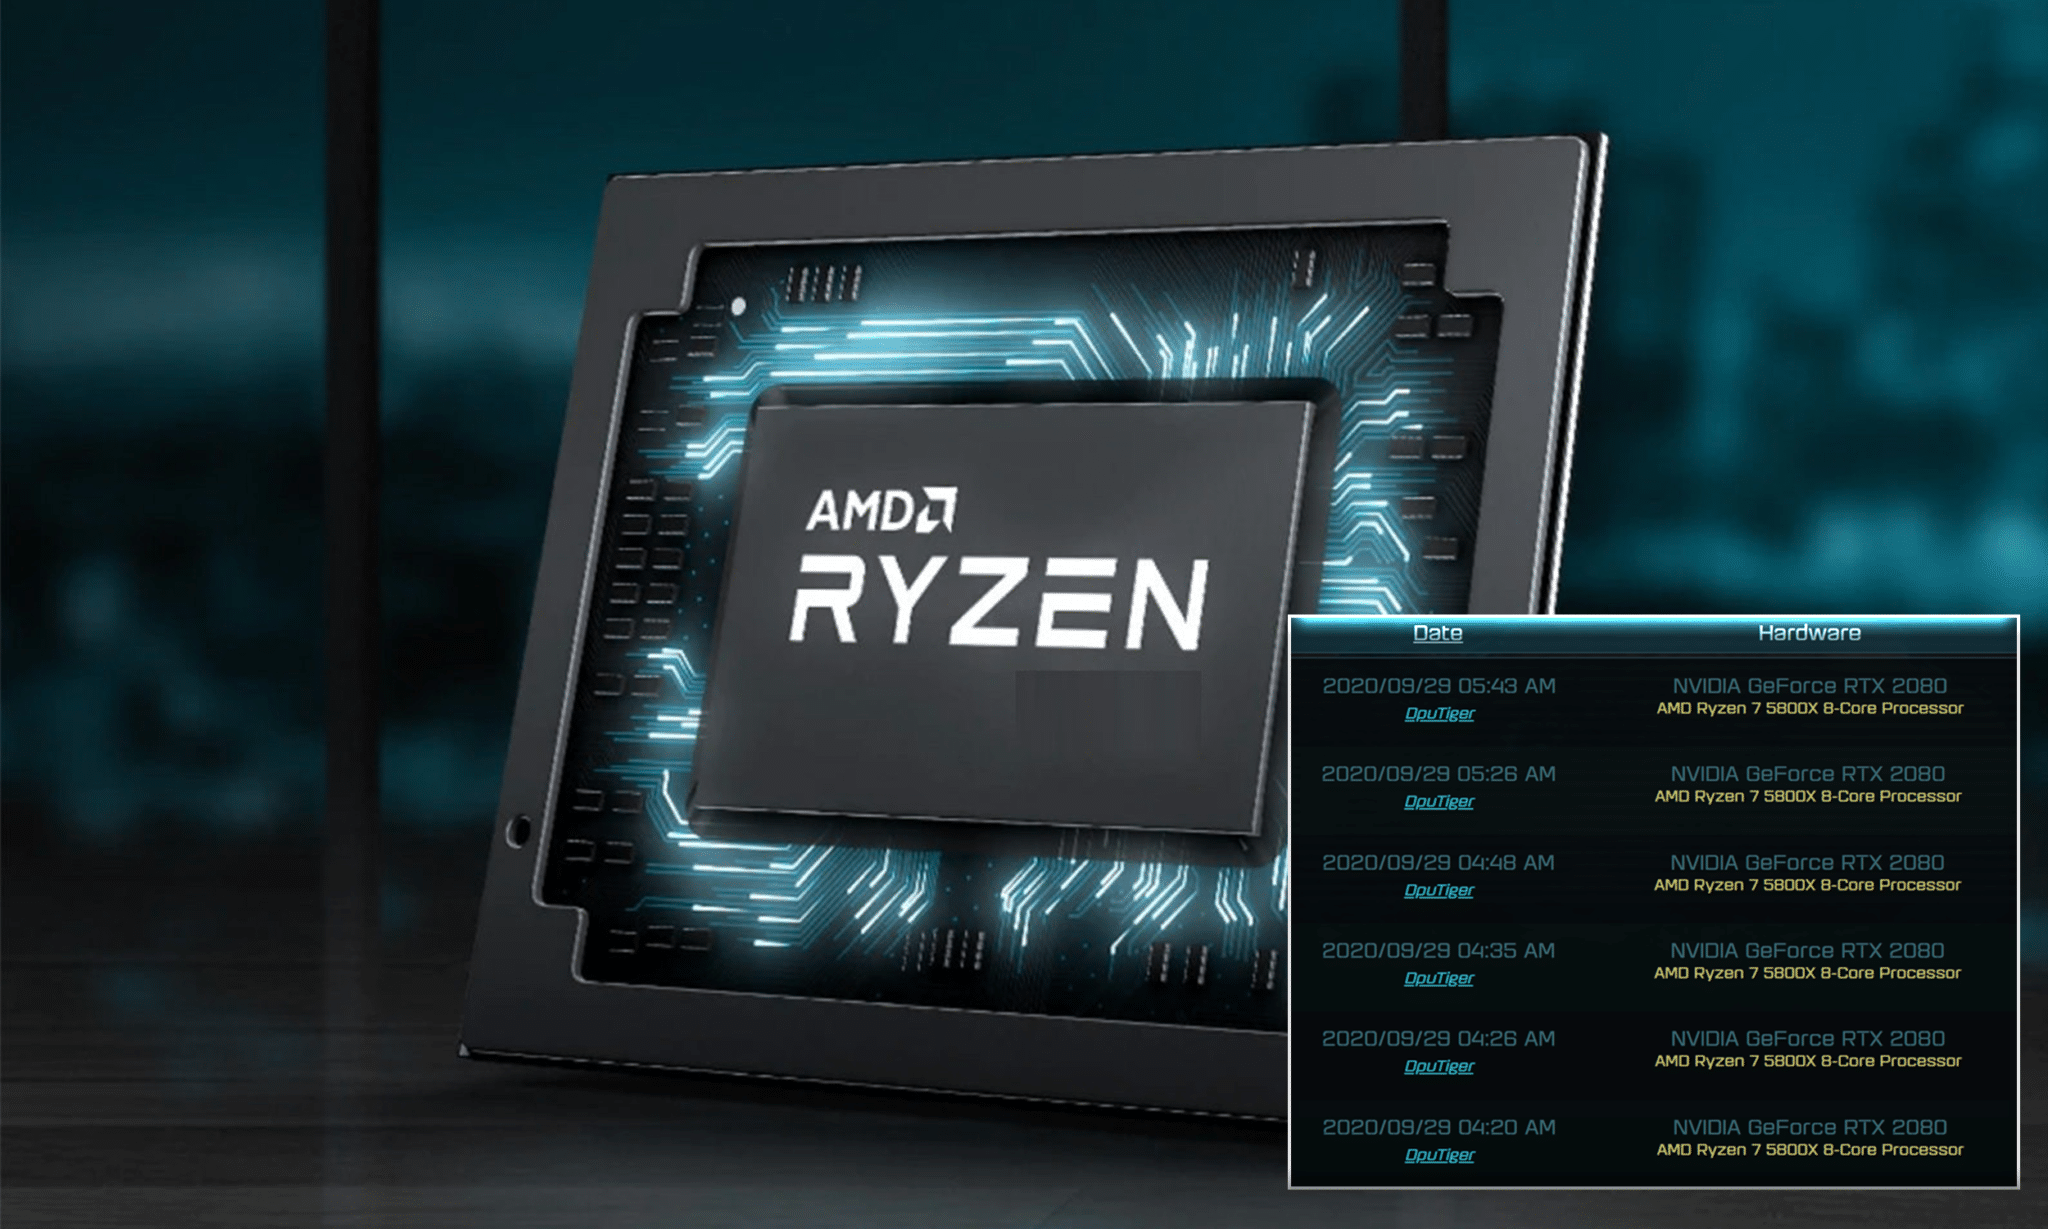 Mysterious AMD Ryzen 7 5800X Listing Vanishes